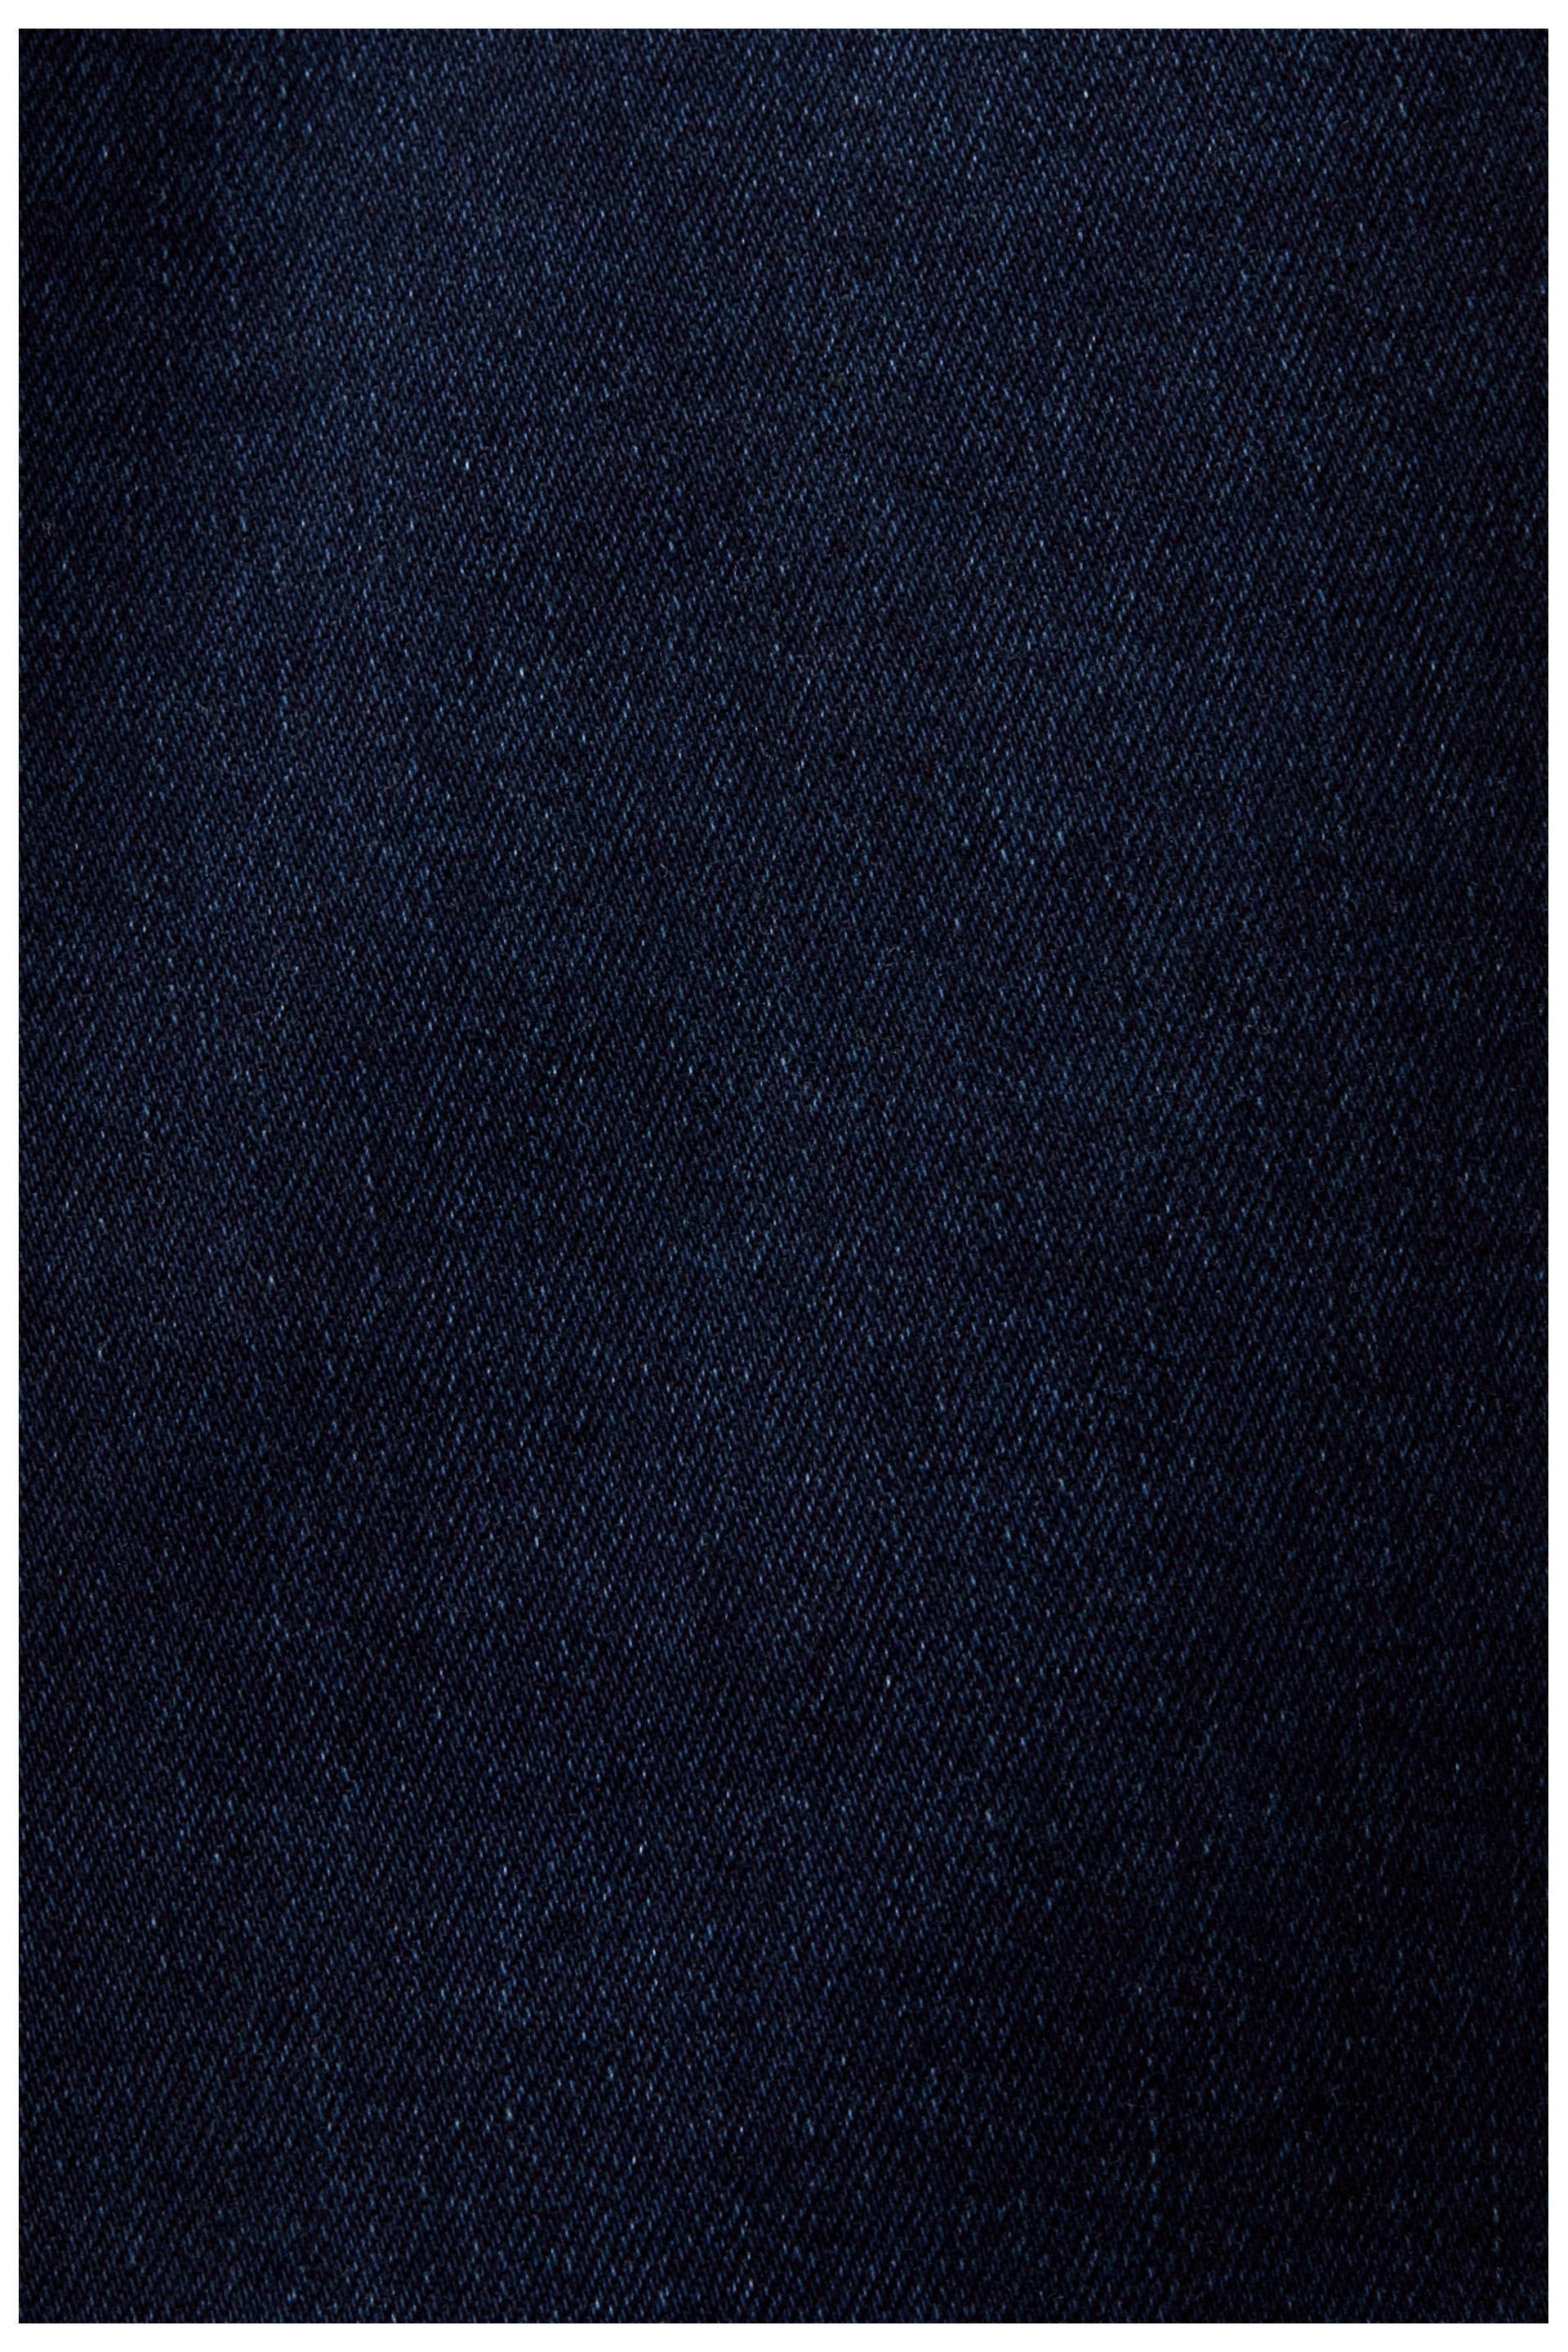 5-Pocket-Jeans Esprit